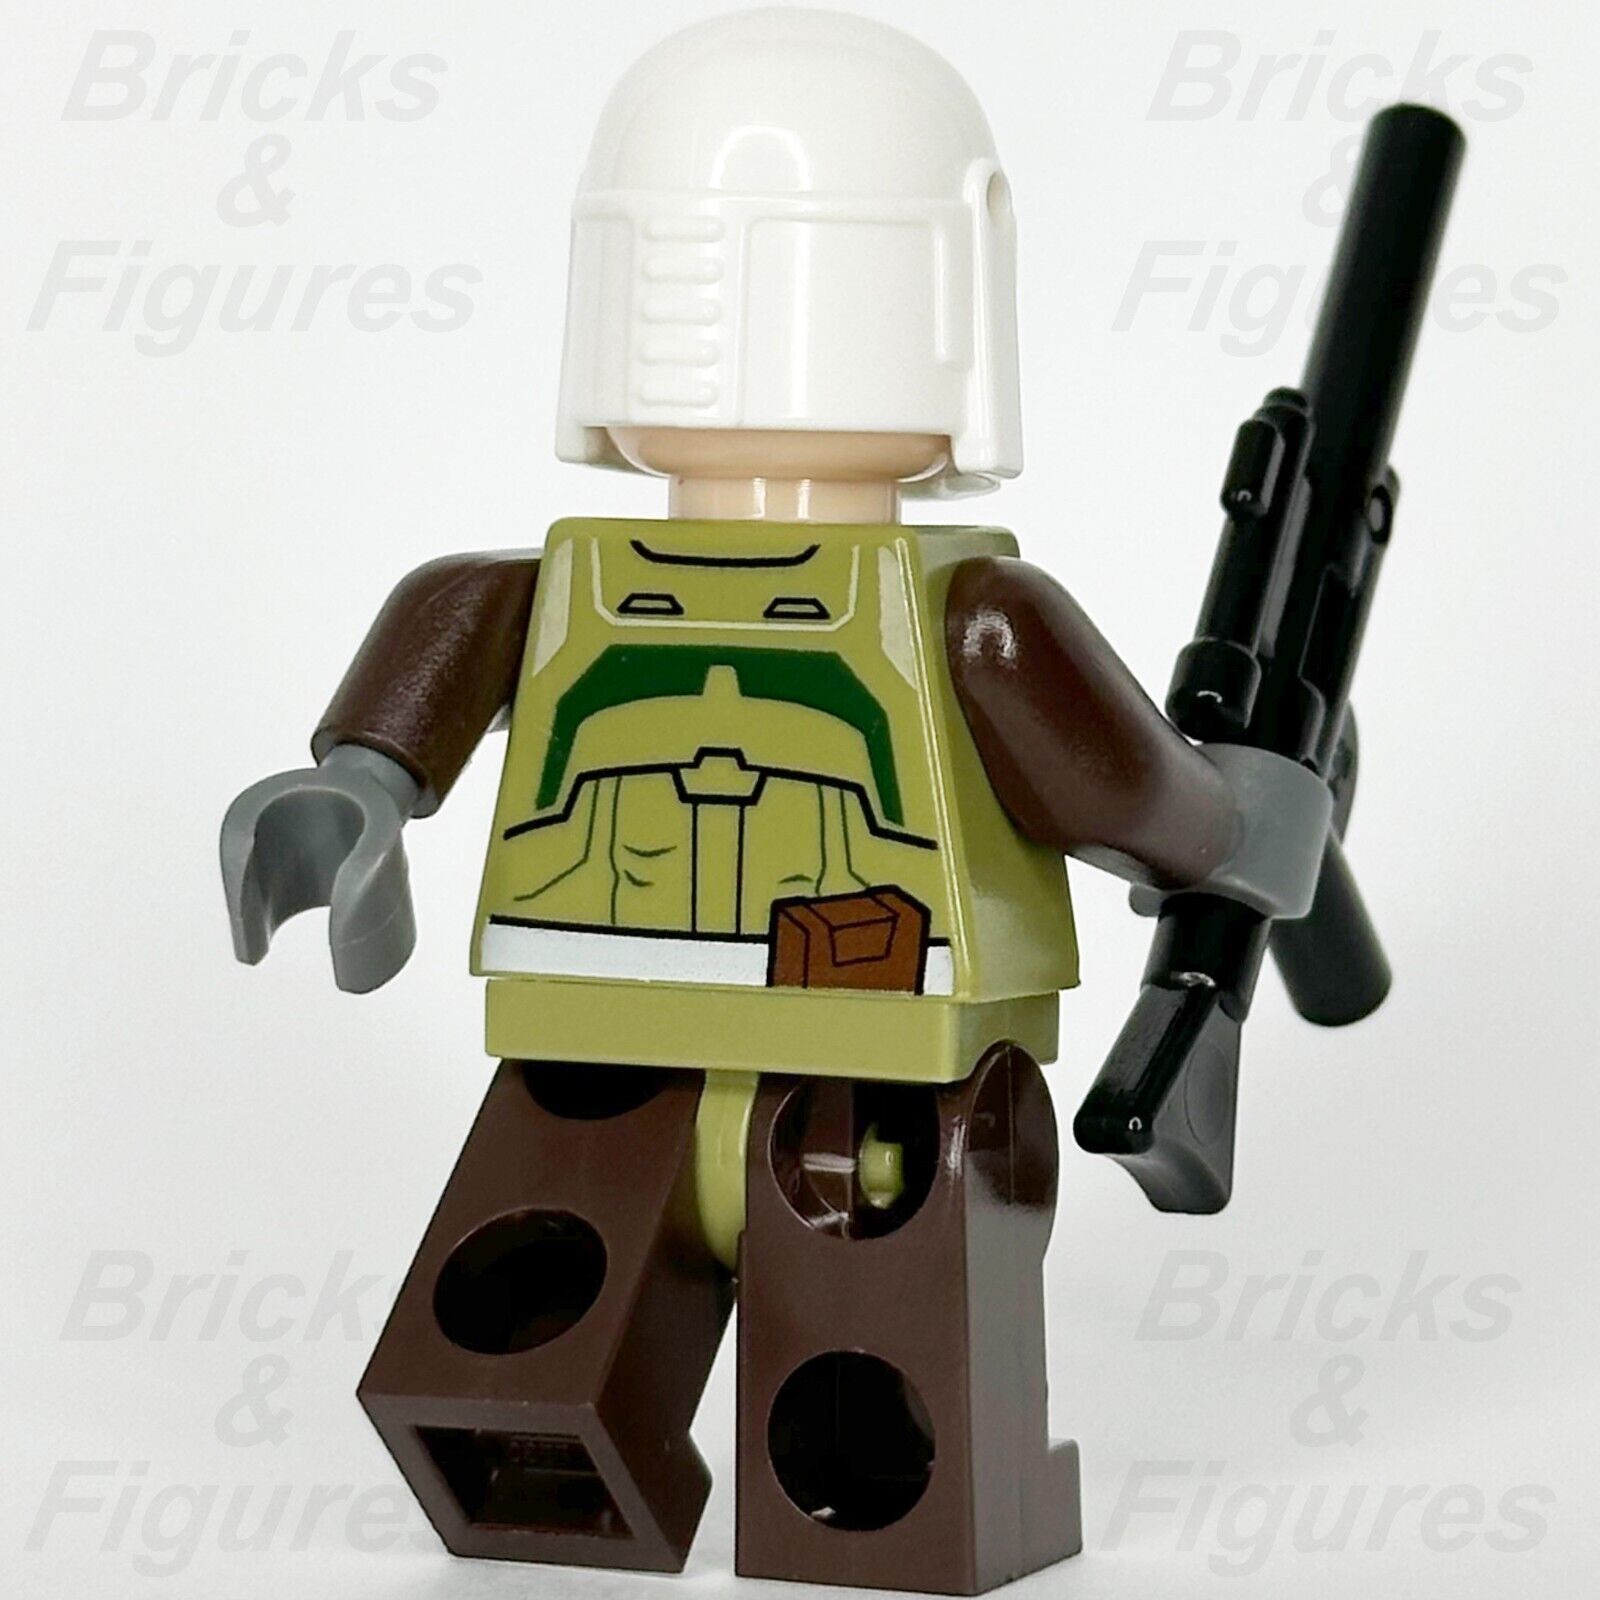 LEGO Star Wars Bounty Hunter Minifigure Yoda Chronicles 75018 sw0476 Minifig